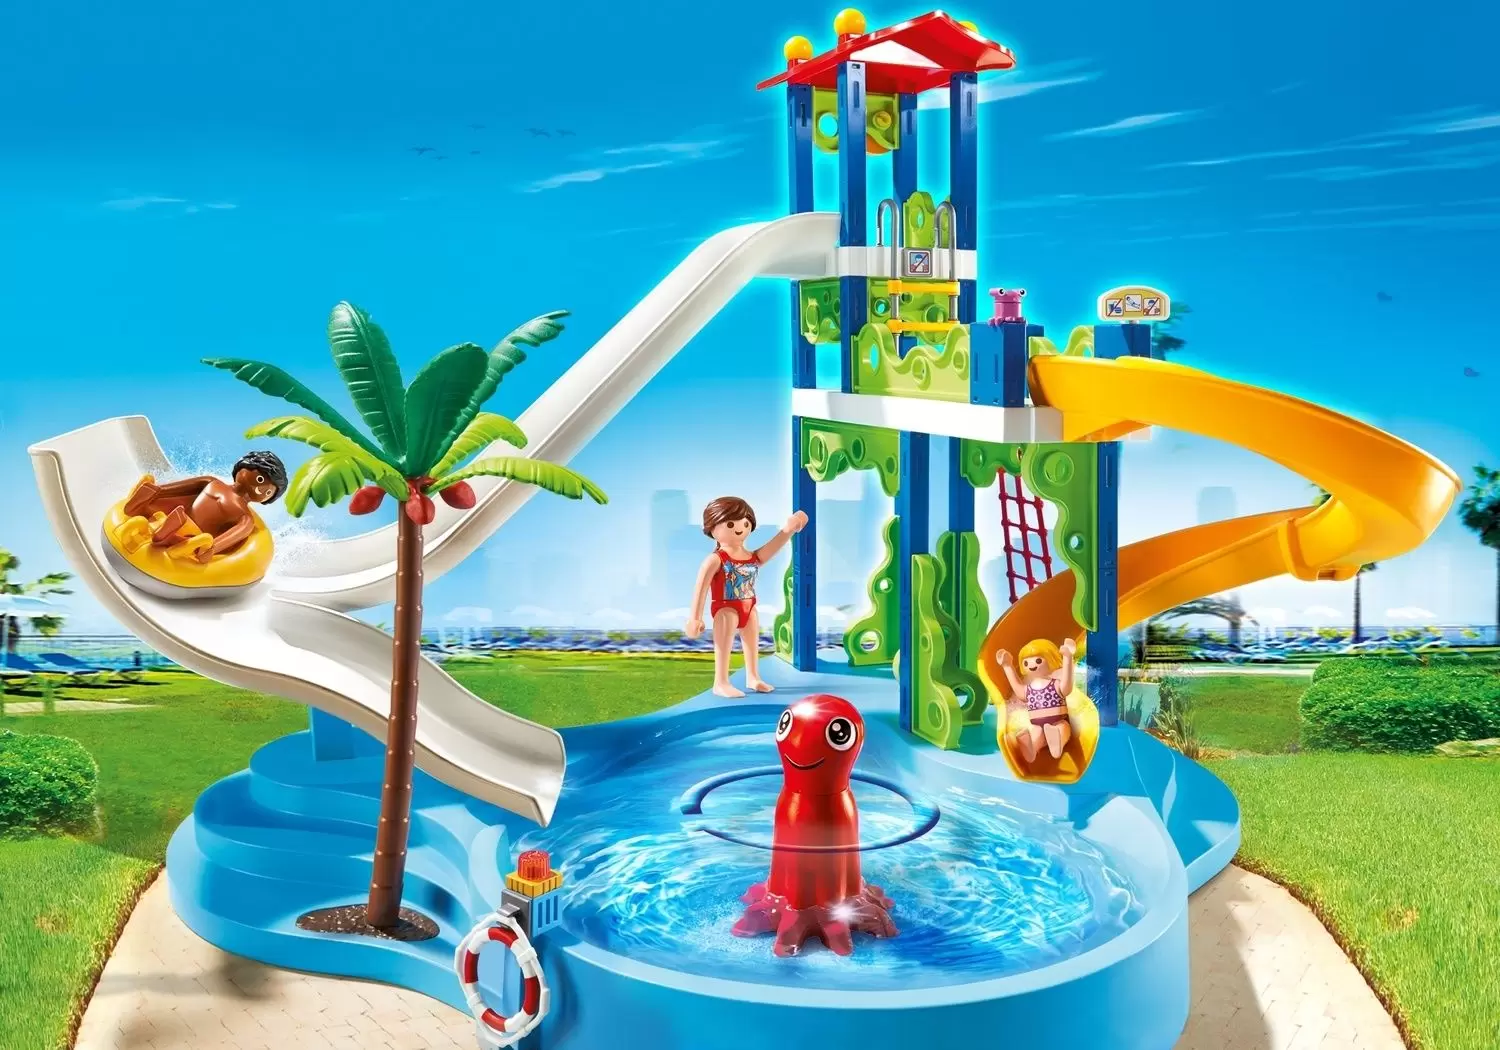 Playmobil en vacances - Parc aquatique avec toboggans géants